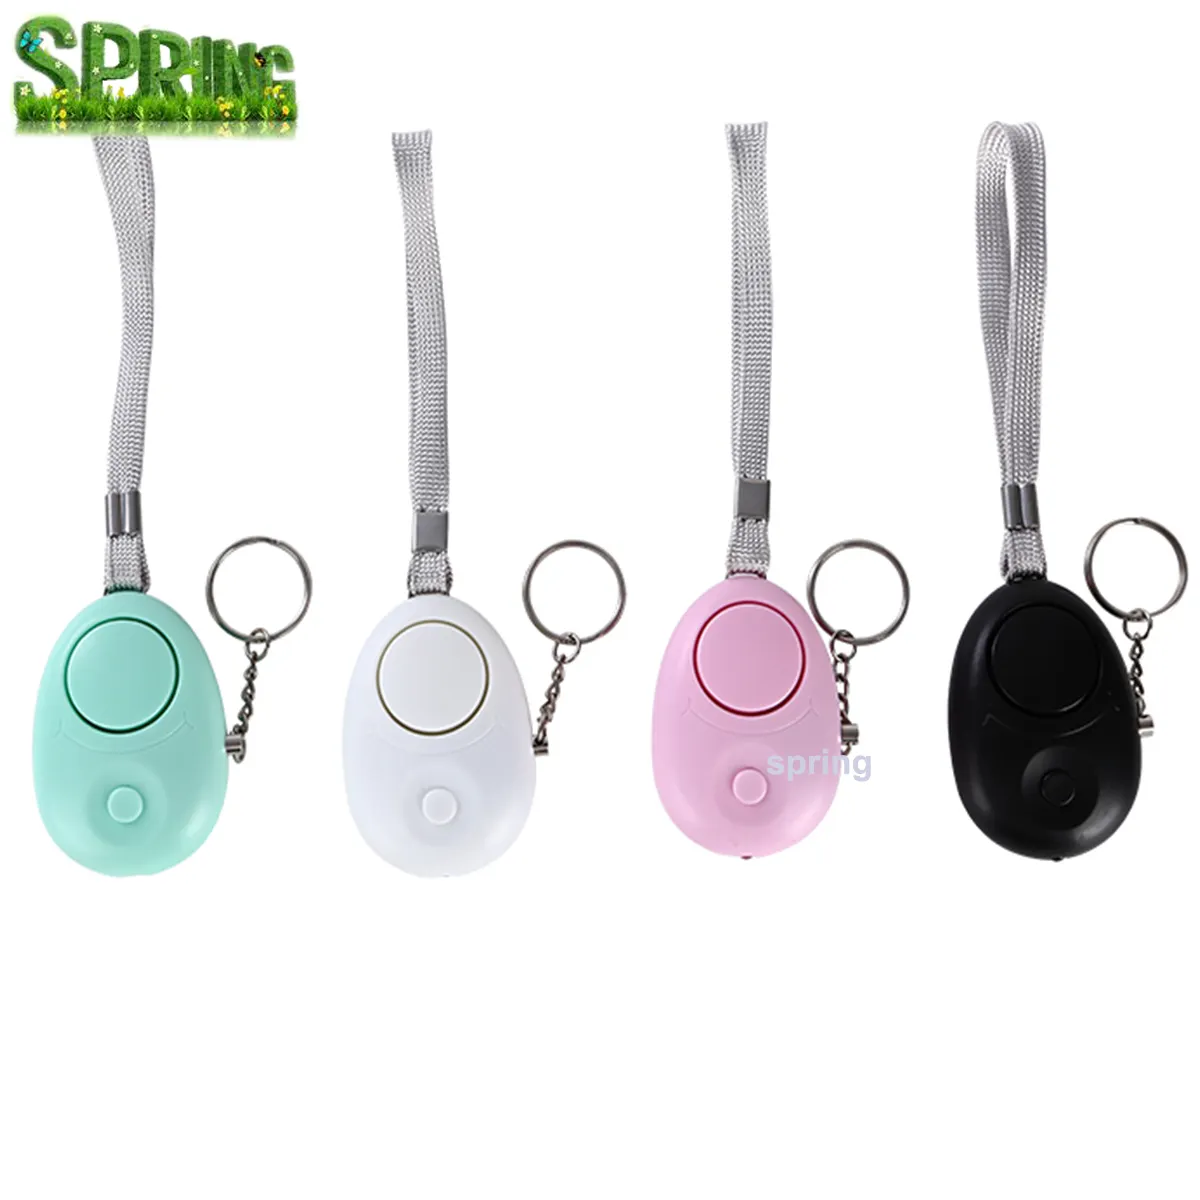 Personal Safe Sound Security Alarm for Women,Kids, Elderly, Emergency Self Defense Alarm with LED Flashlight Keychain